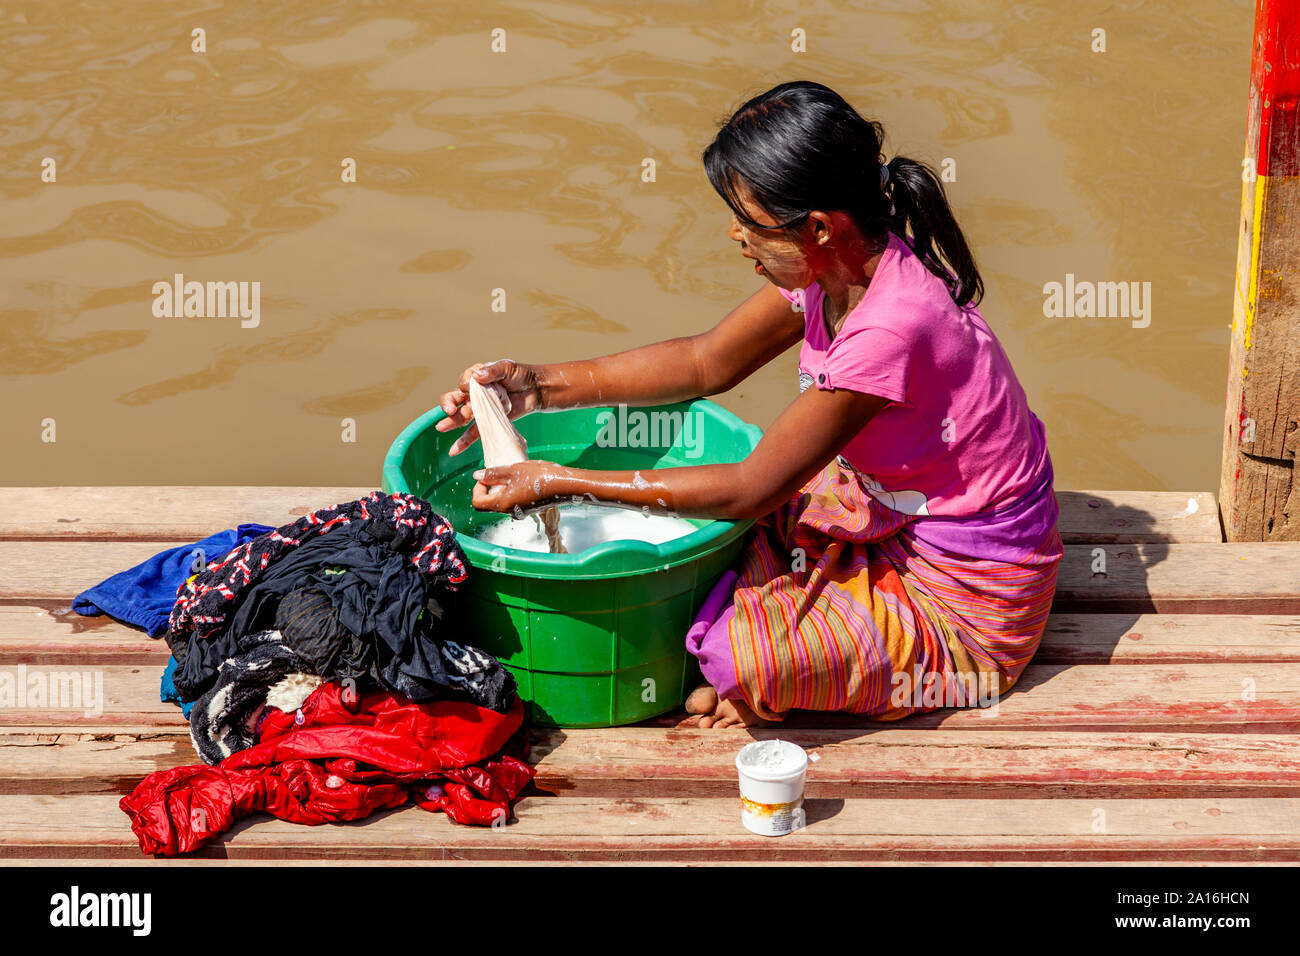 https://c8.alamy.com/comp/2A16HCN/a-local-woman-washing-clothes-lake-inle-shan-state-myanmar-2A16HCN.jpg